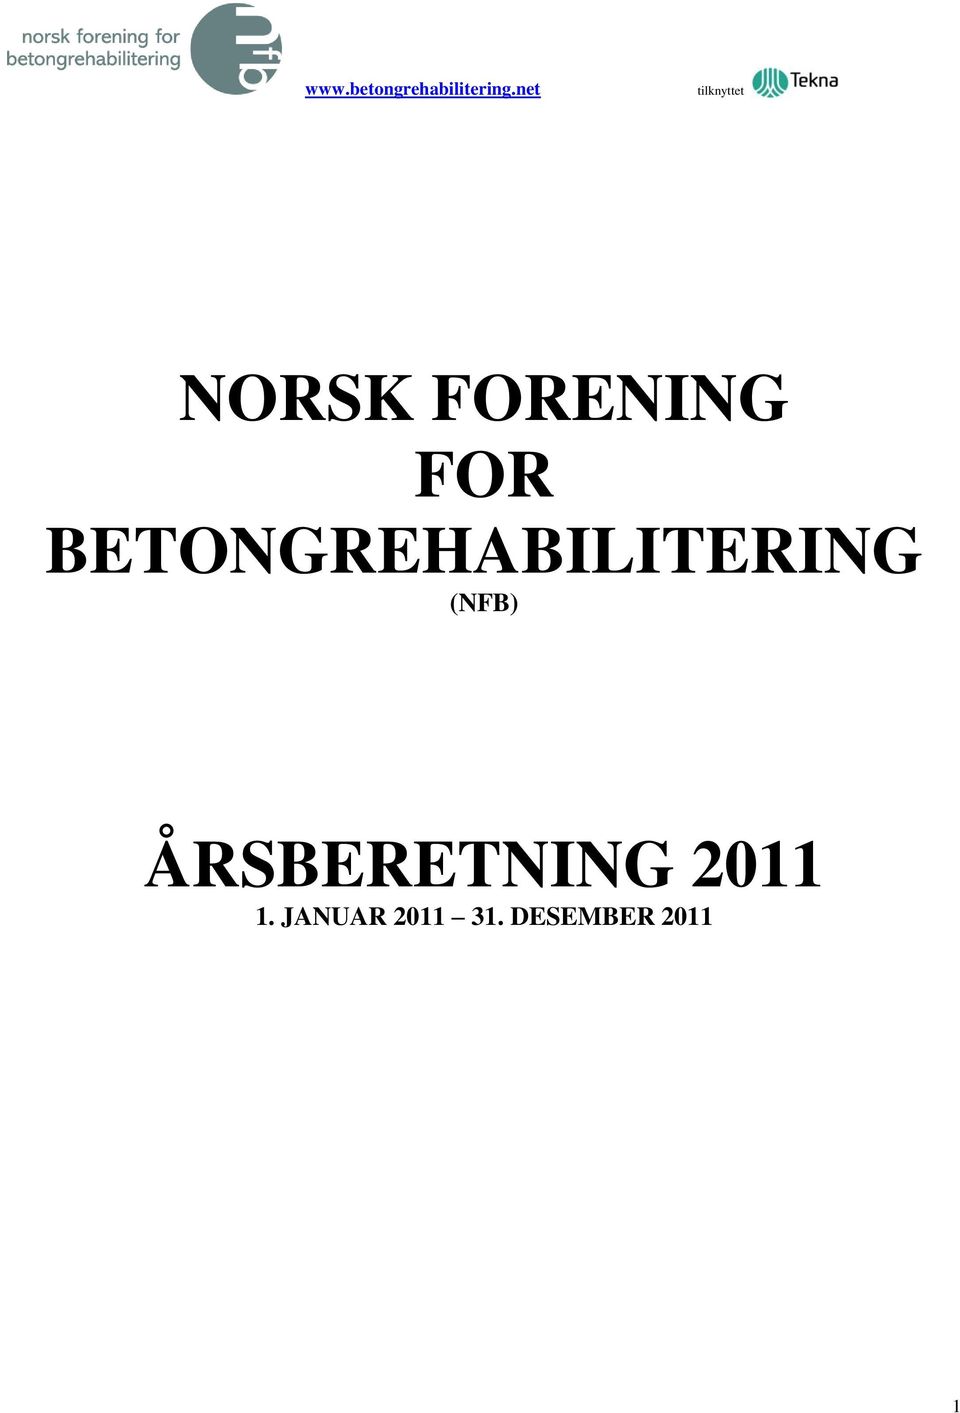 BETONGREHABILITERING (NFB)